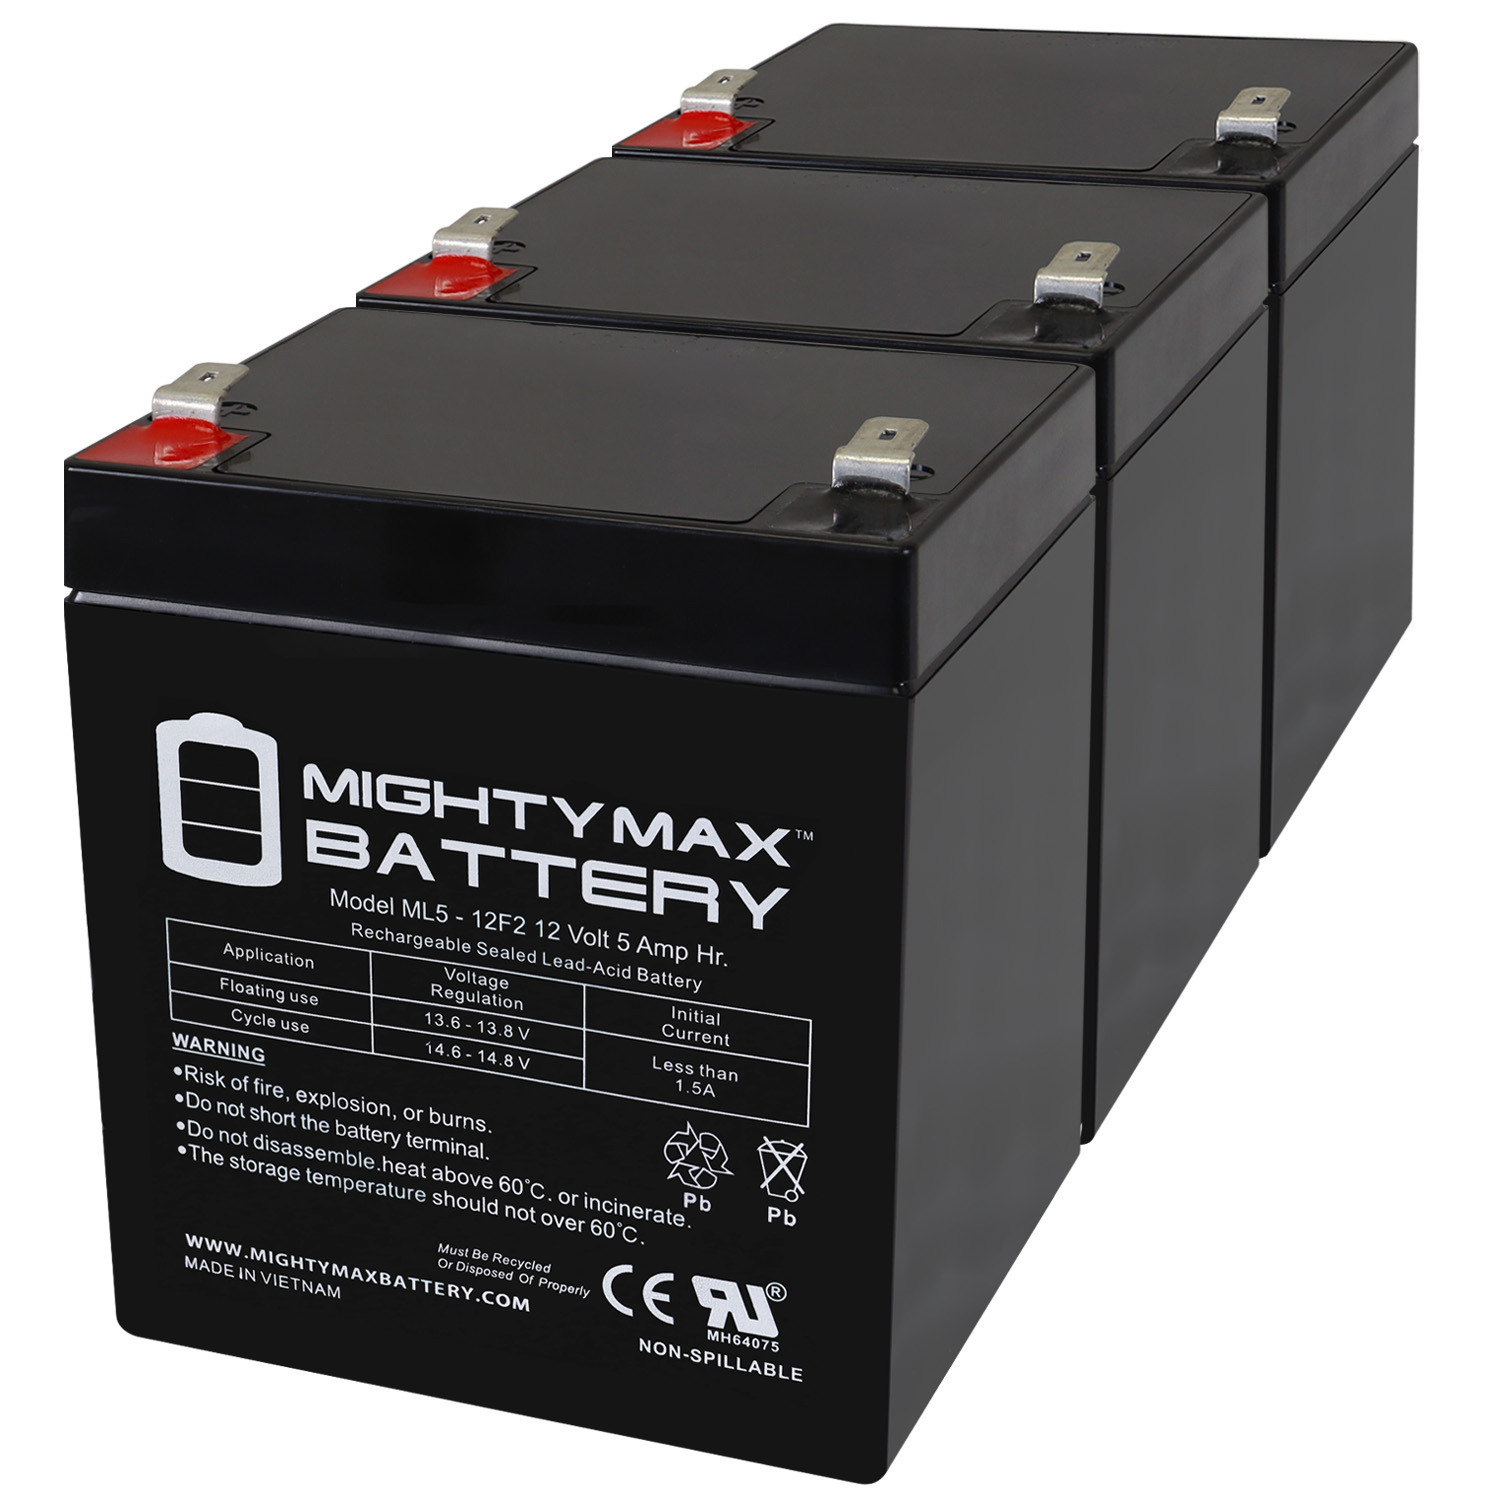 12V 5Ah F2 SLA Replacement Battery for Trikke E2 #20159460 - 3 Pack